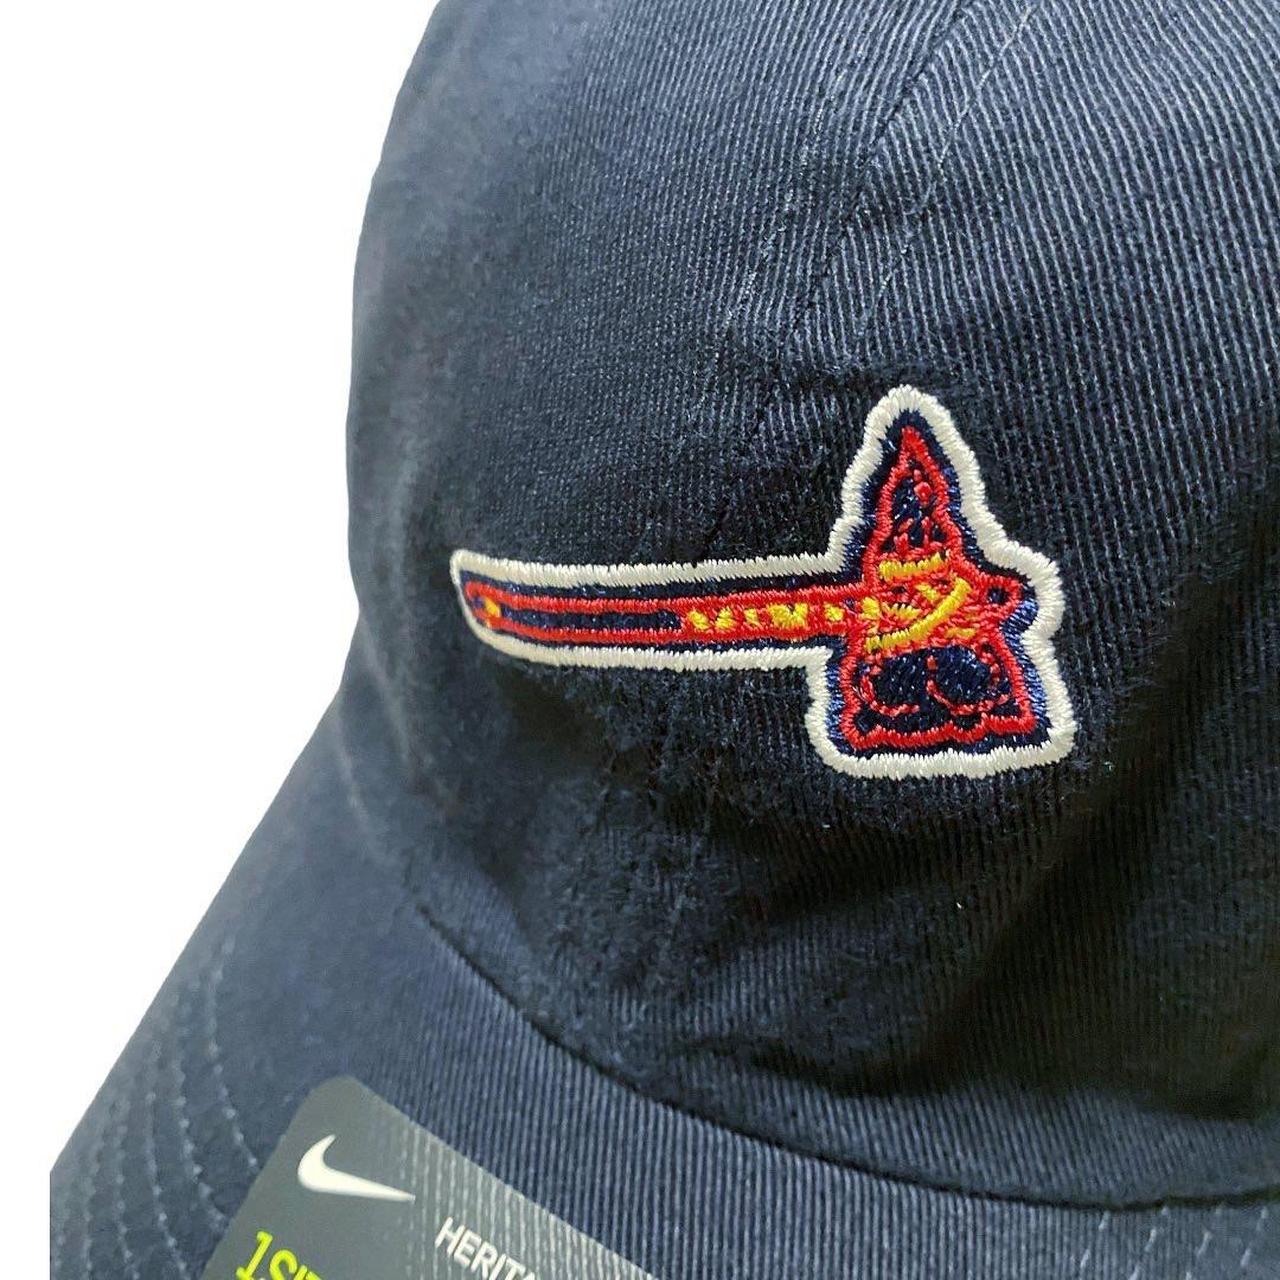 Atlanta Braves Heritage86 Men's Nike MLB Adjustable Hat